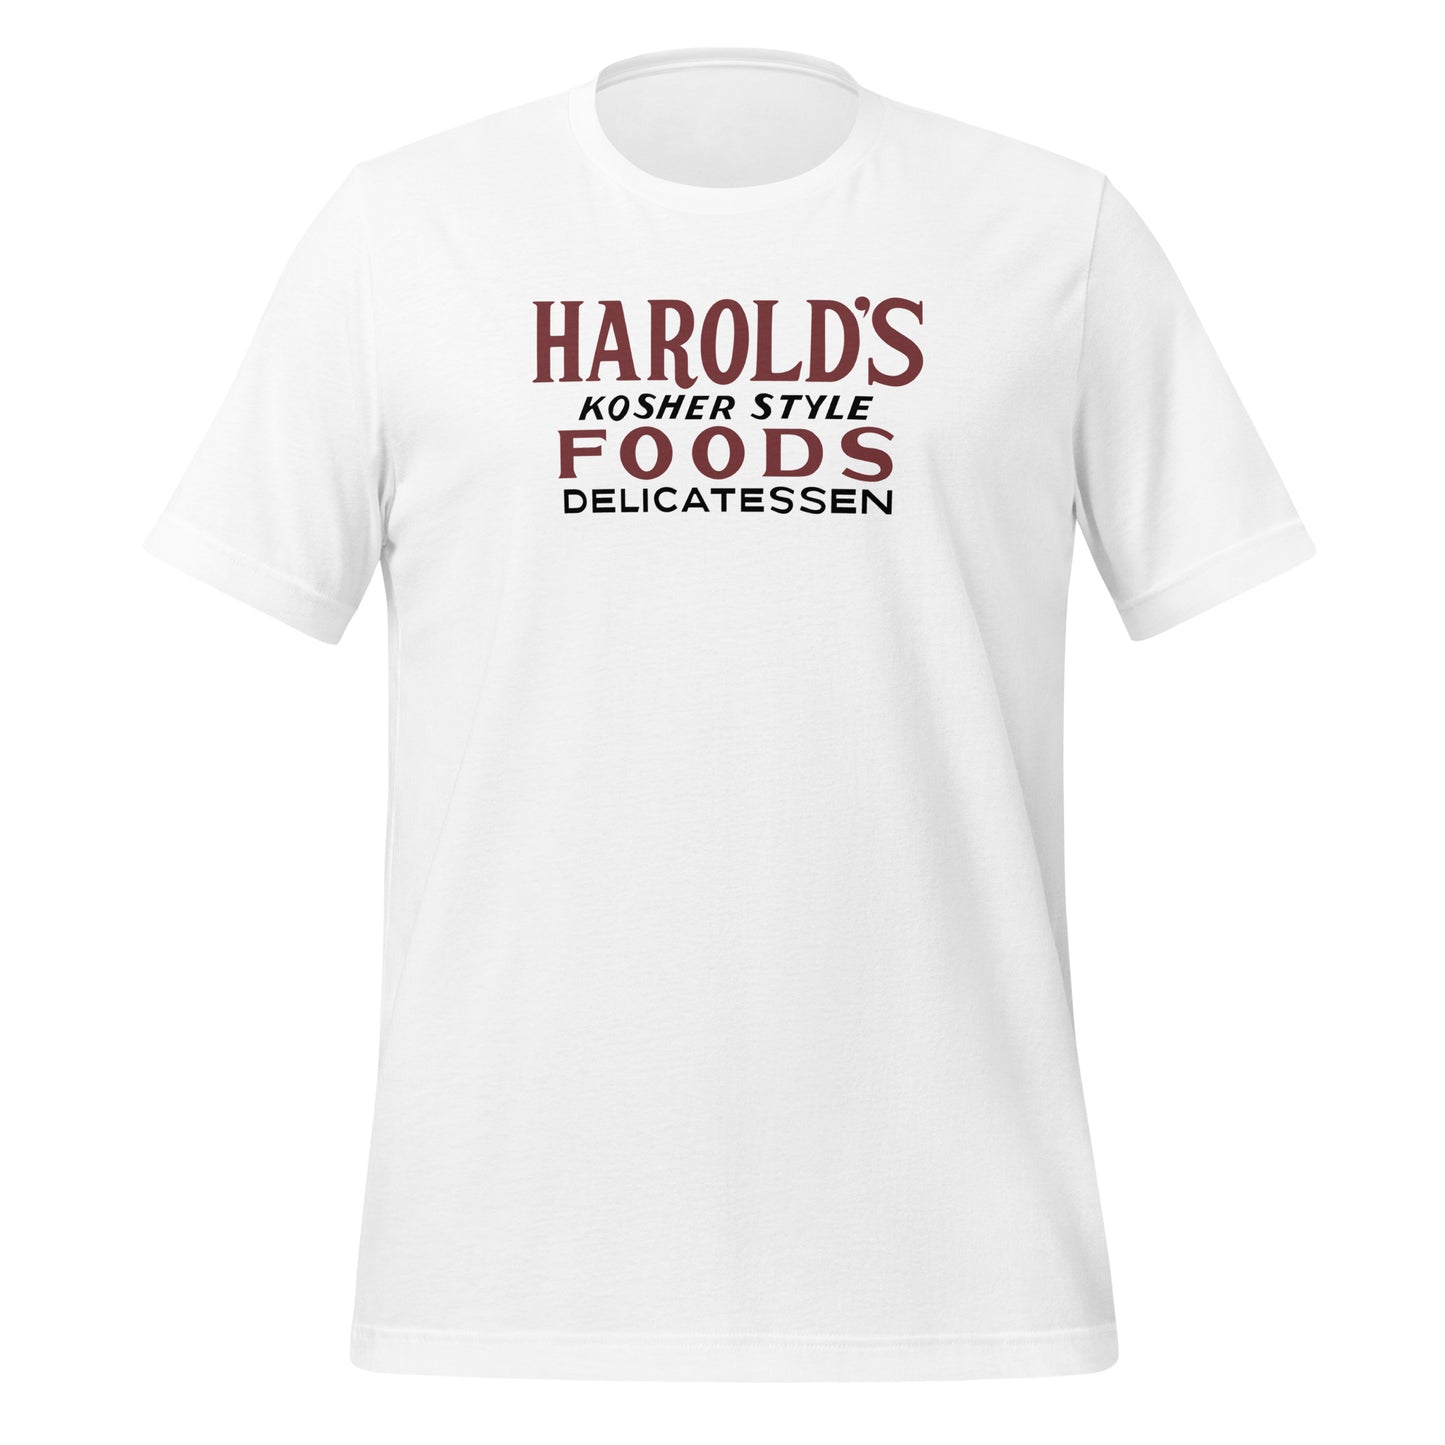 Harold's Deli unisex printed t-shirt